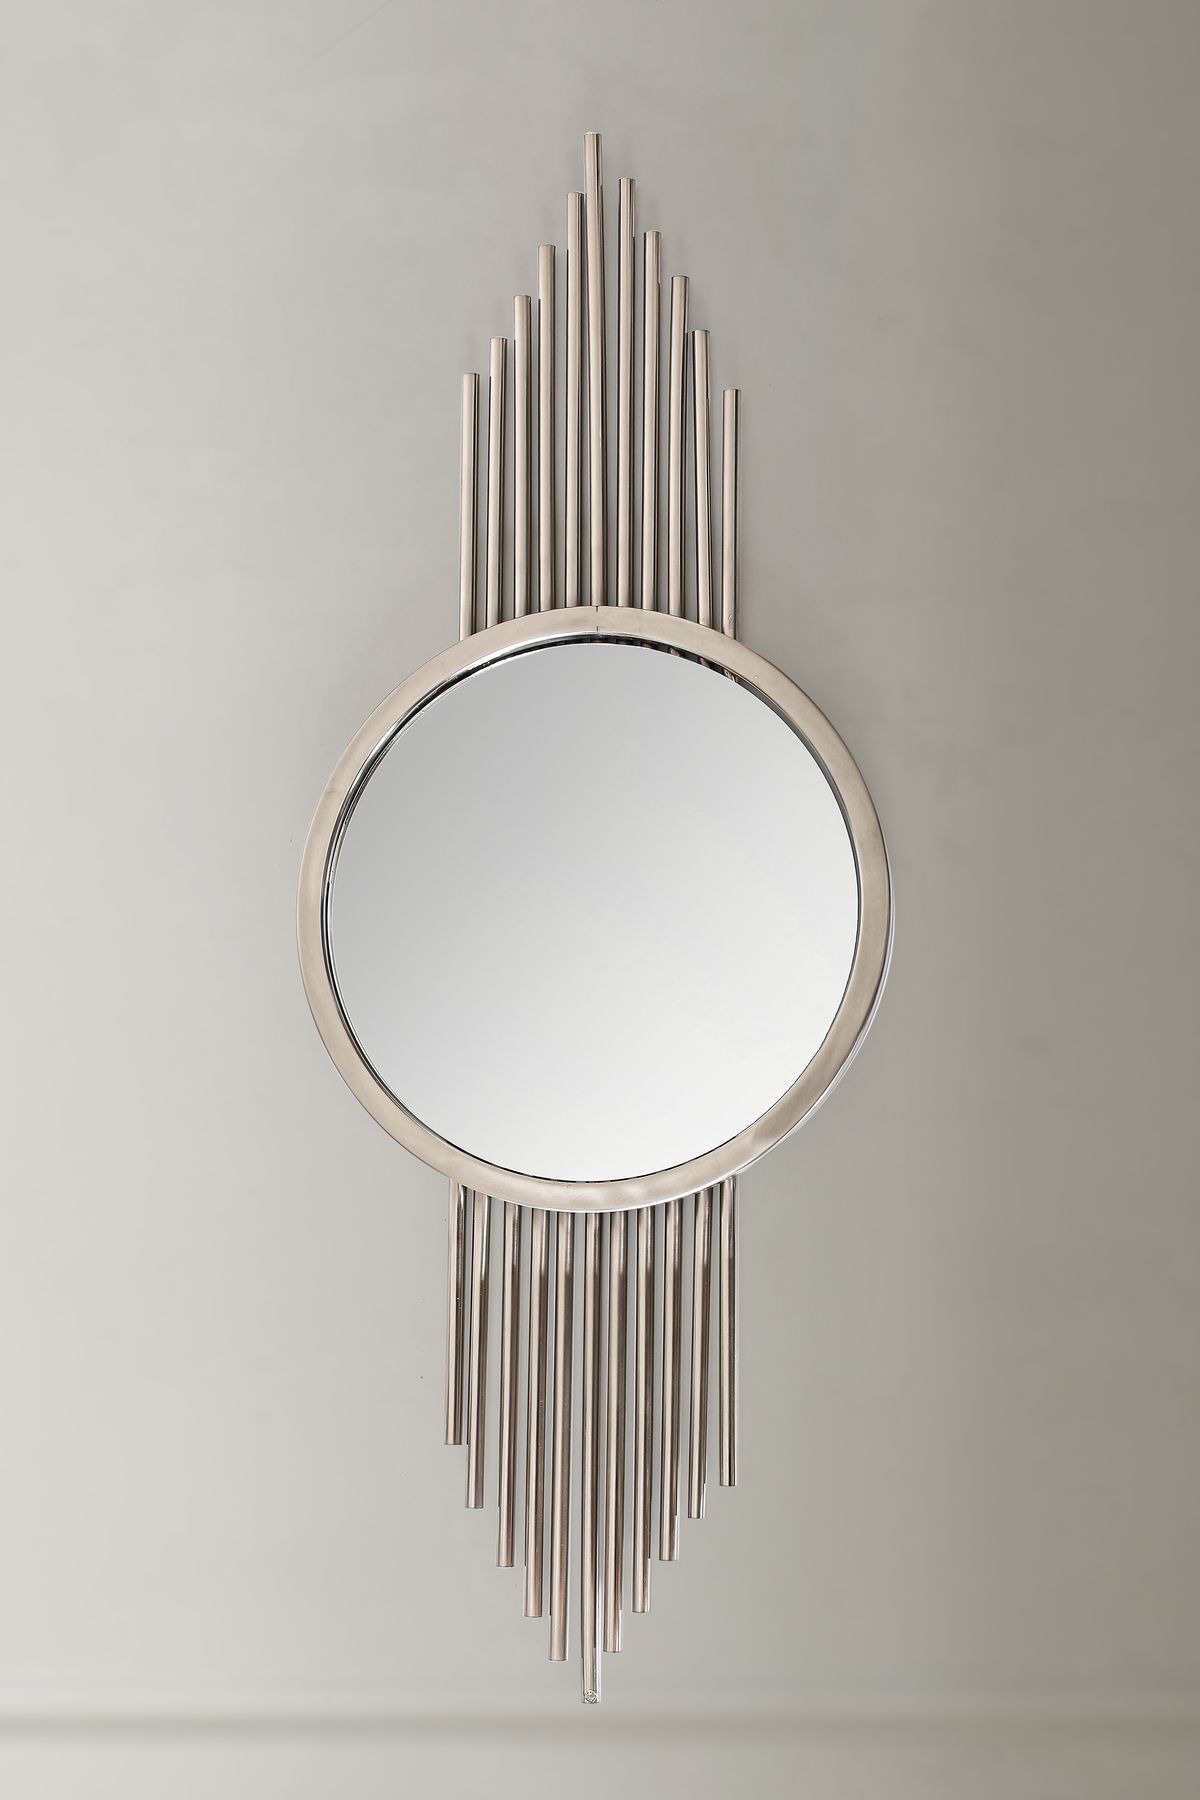 Vinner DKAY-001 Krom Kaplama Dekoratif Ayna